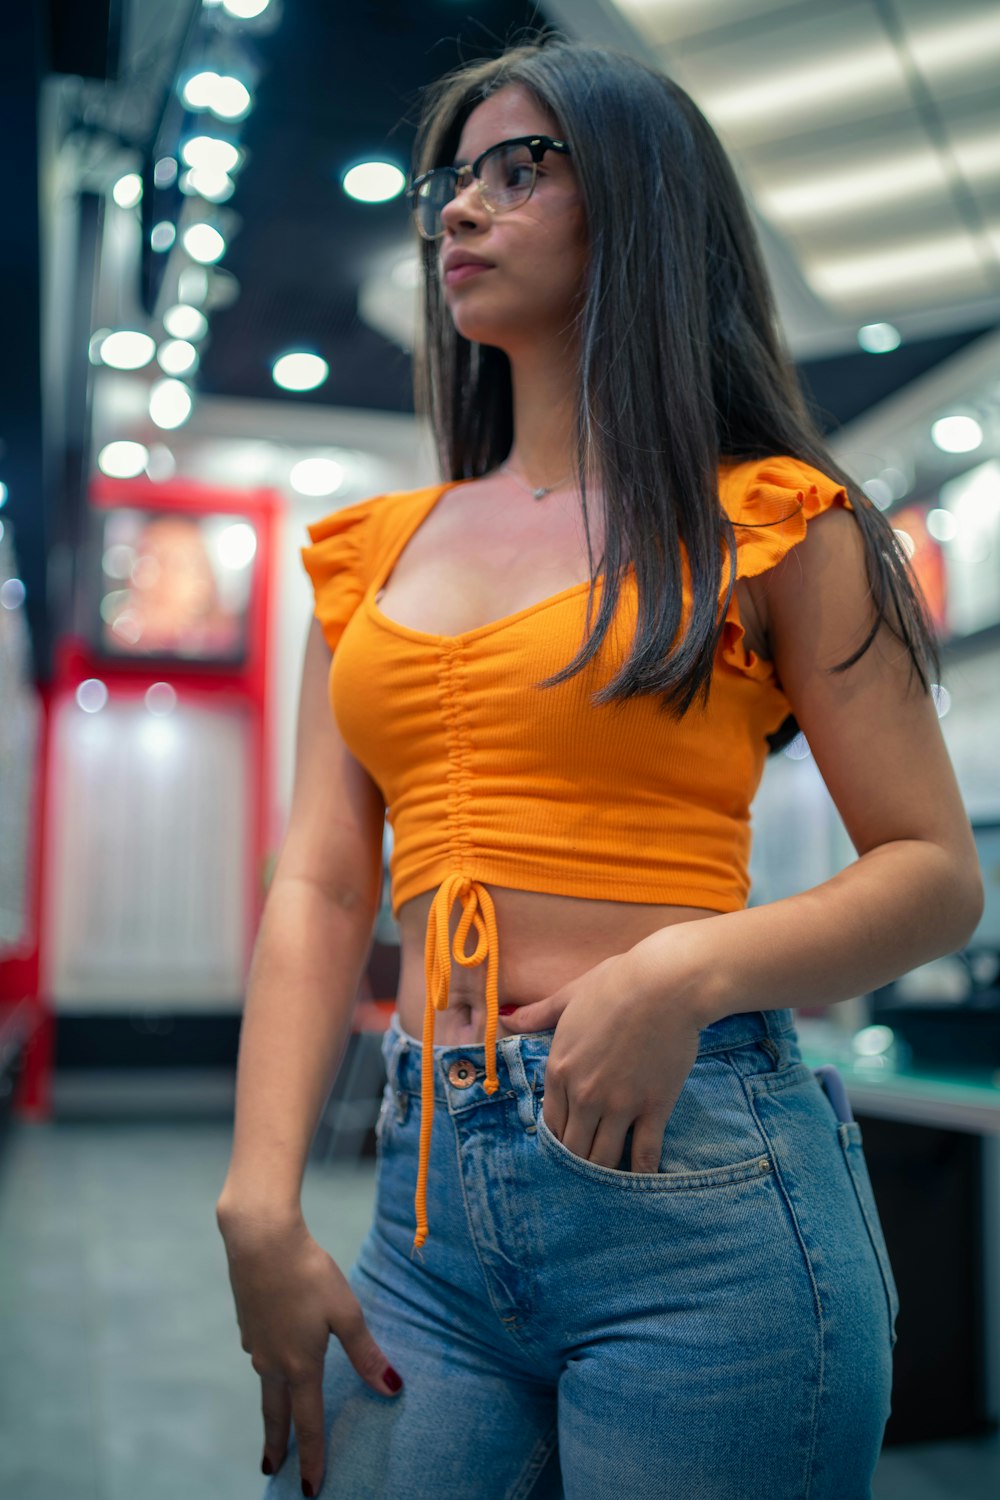 Woman orange tank top and blue denim shorts Free Clothing Image on Unsplash